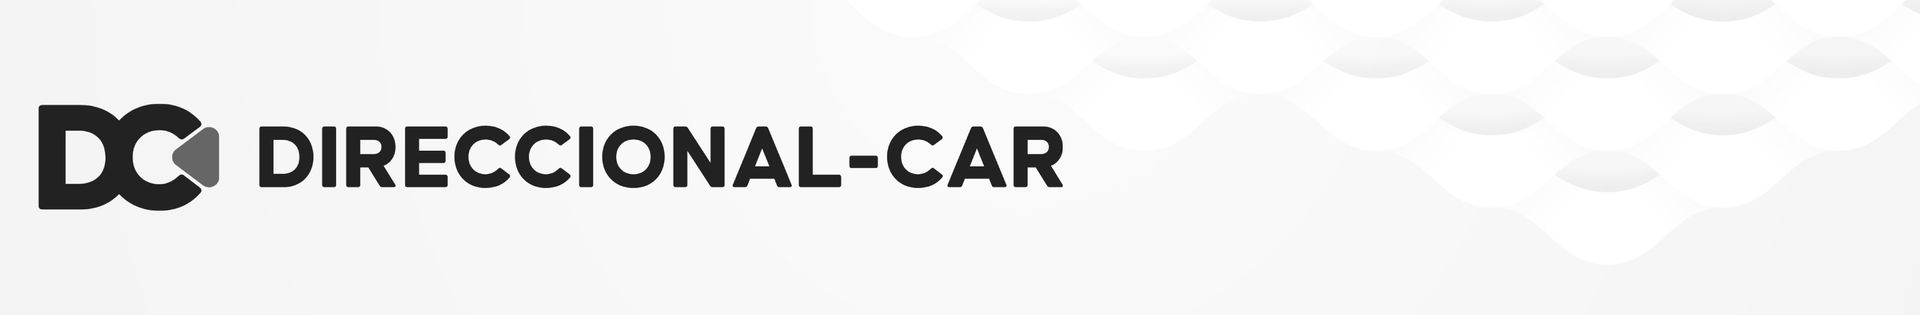 Direccional-Car | O seu stand Mercedes-Benz top banner